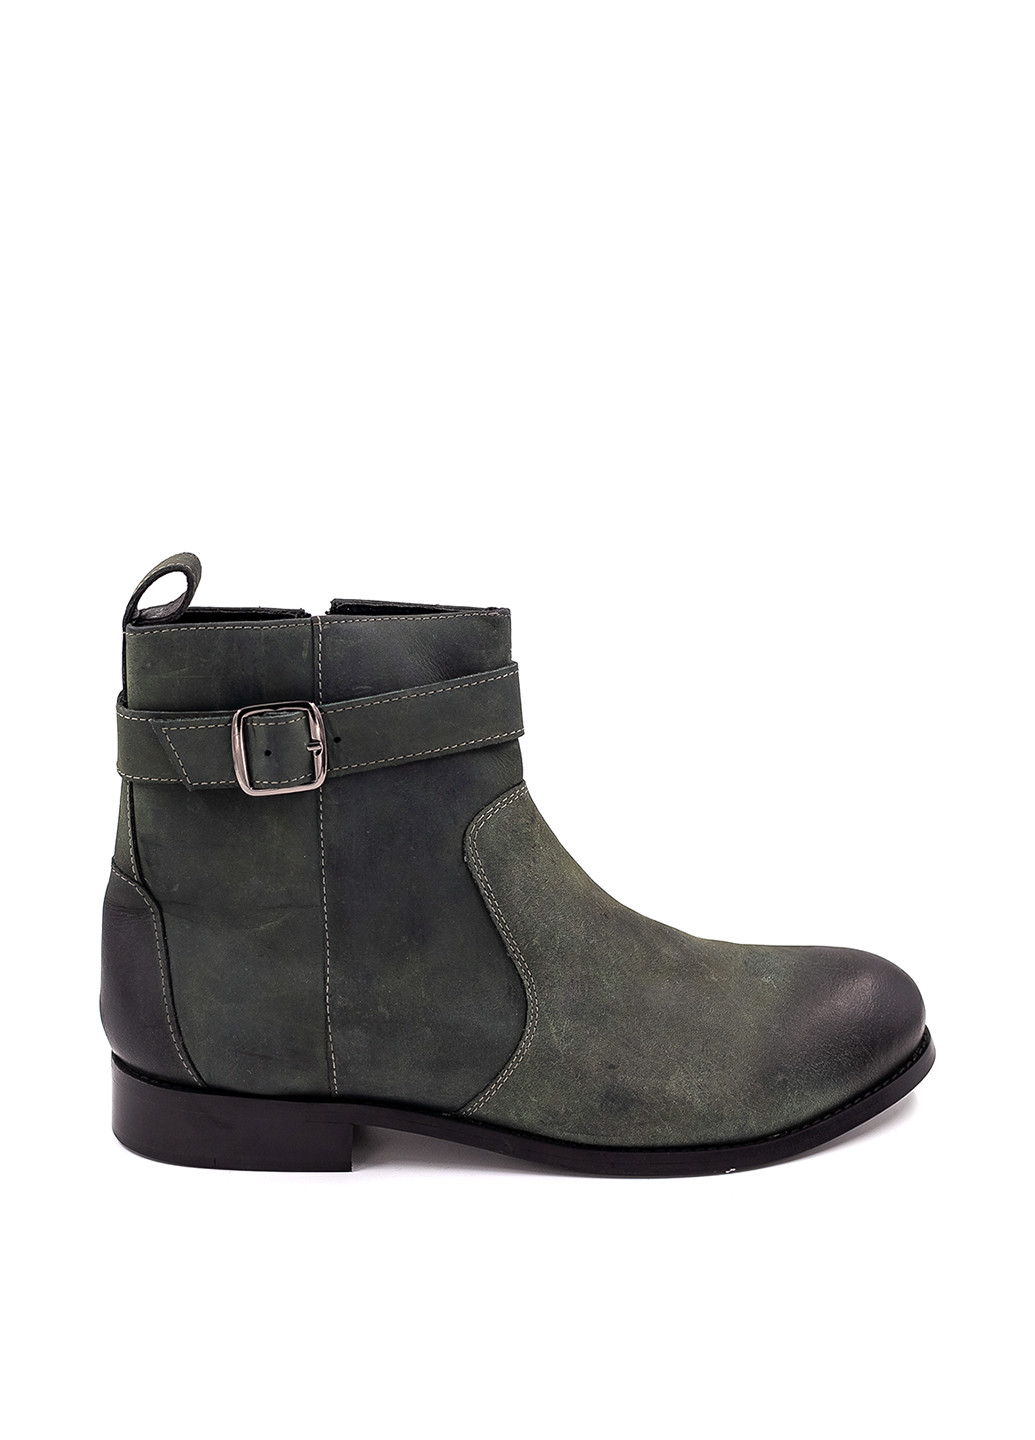 Темно-зеленые осенние ботинки Christian Laurier